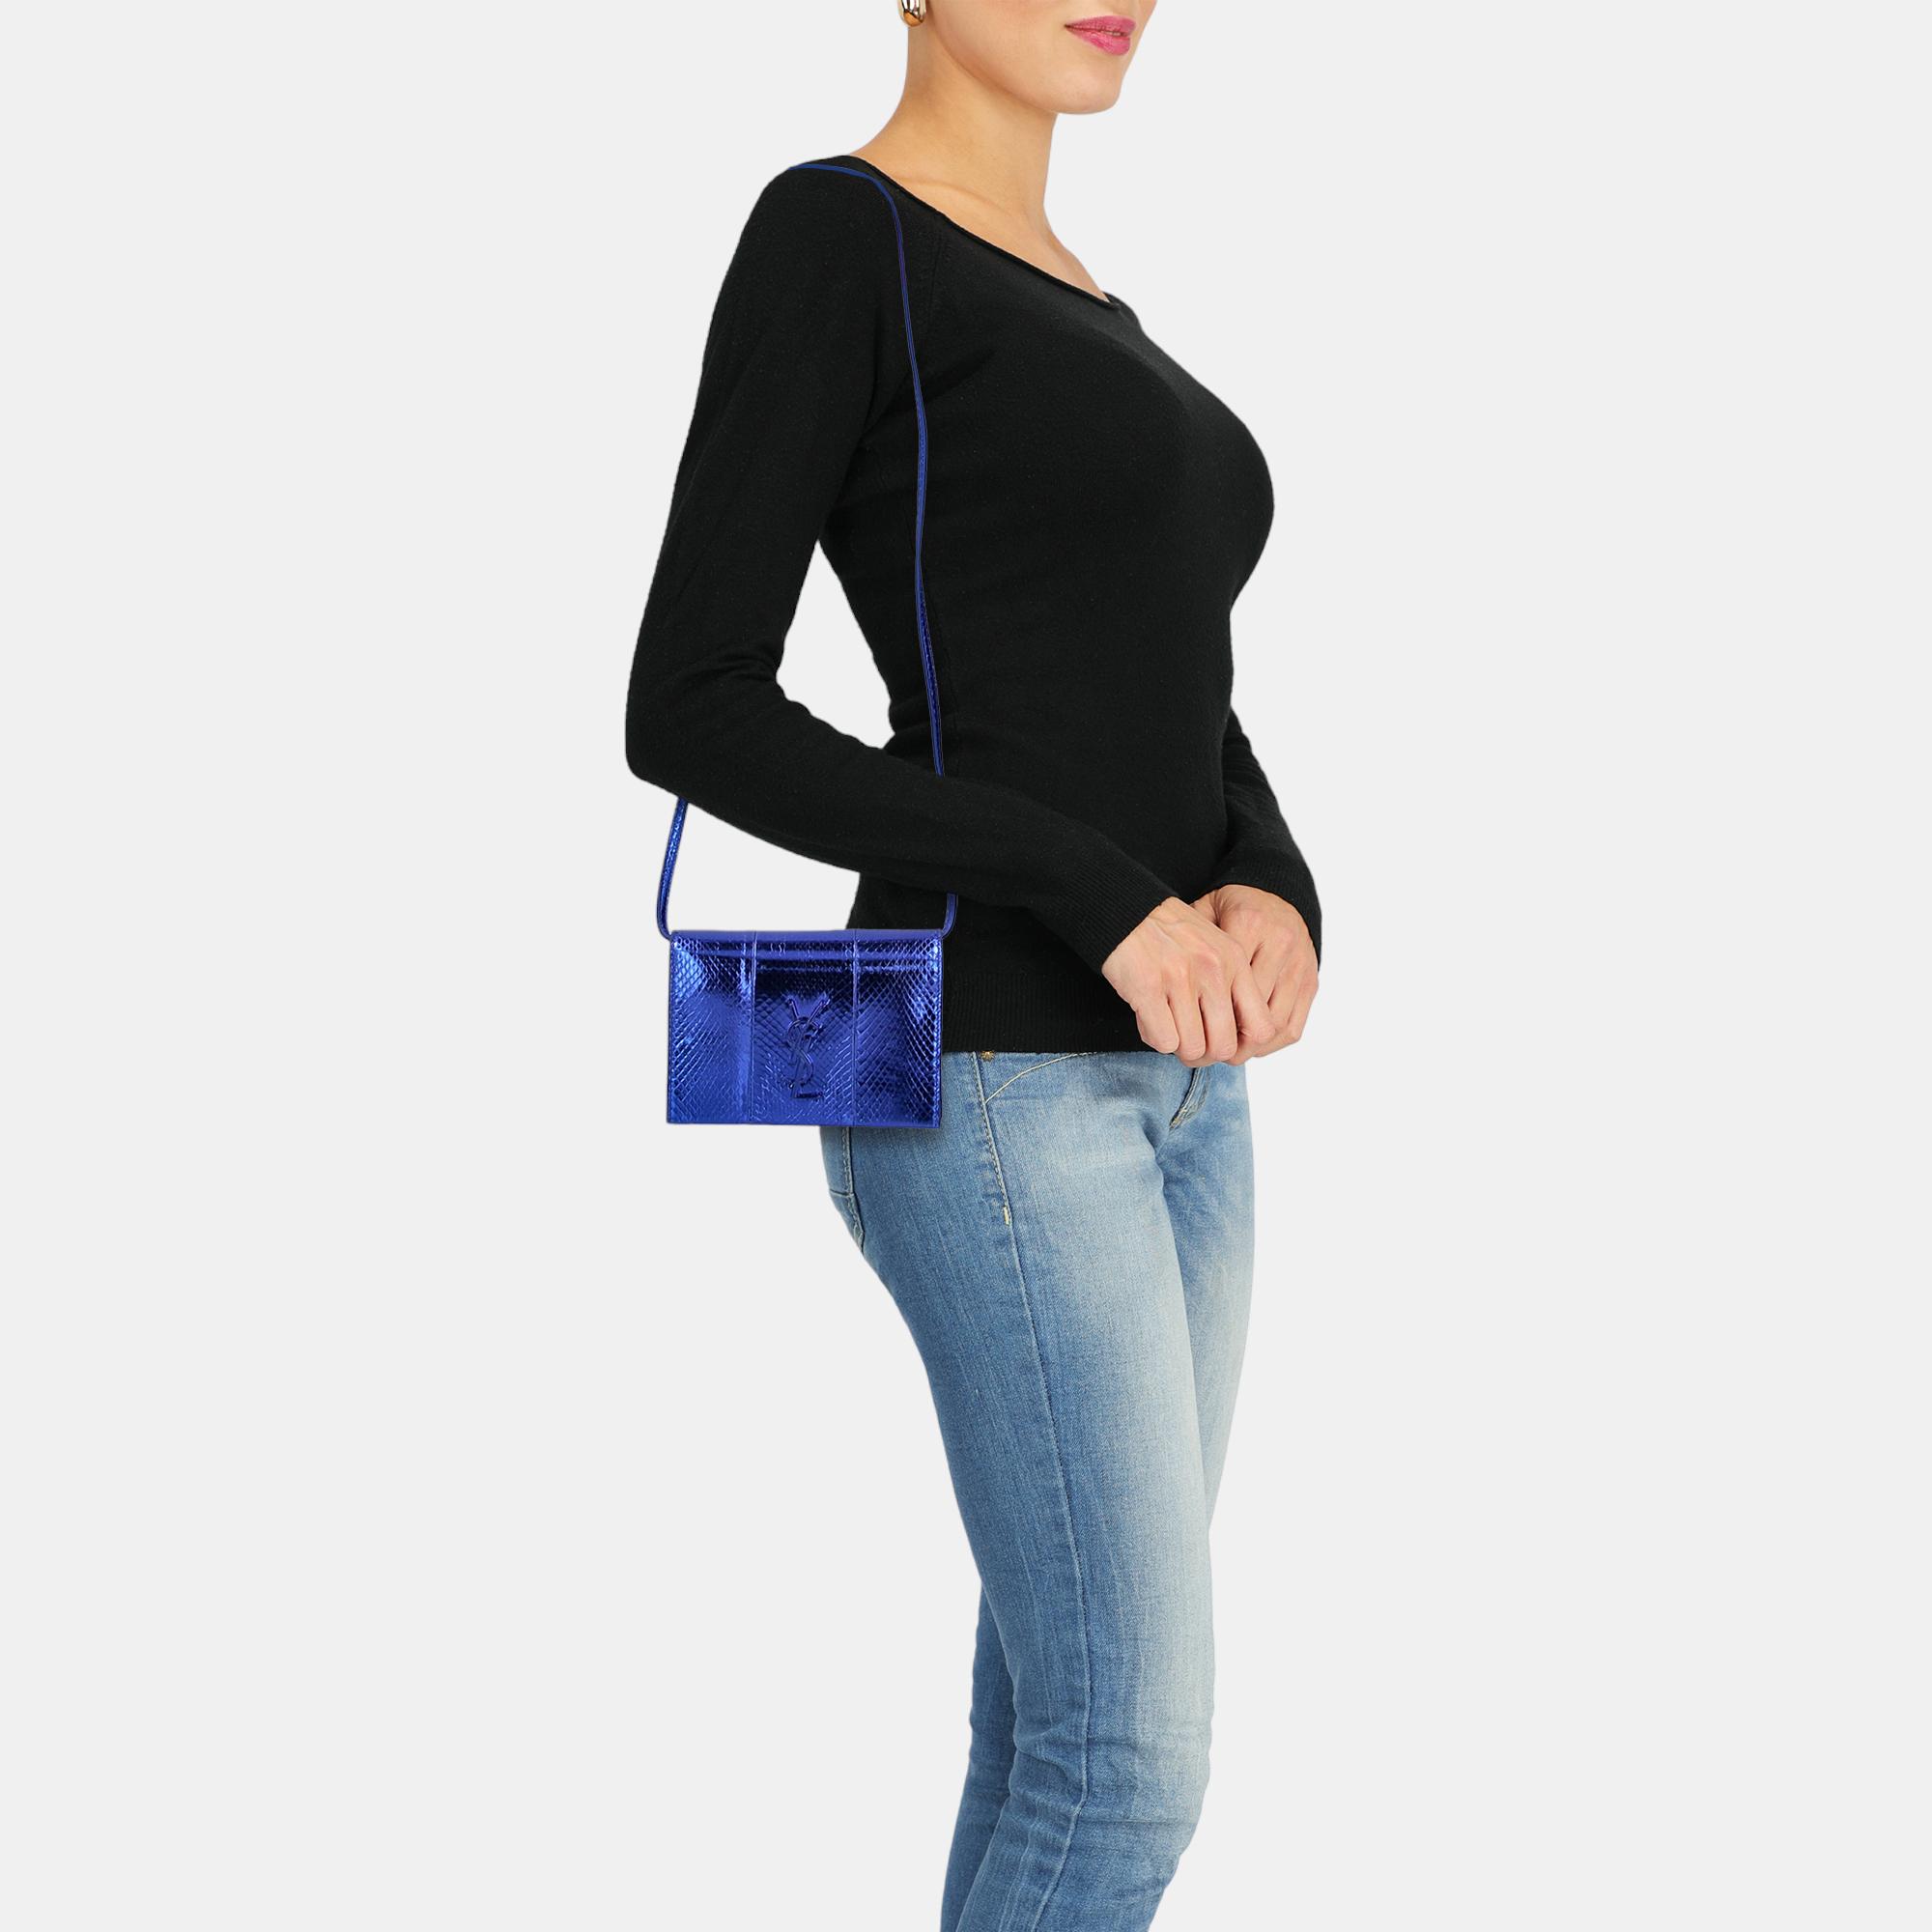 Saint Laurent  Women's Leather Handbag - Navy - One Size